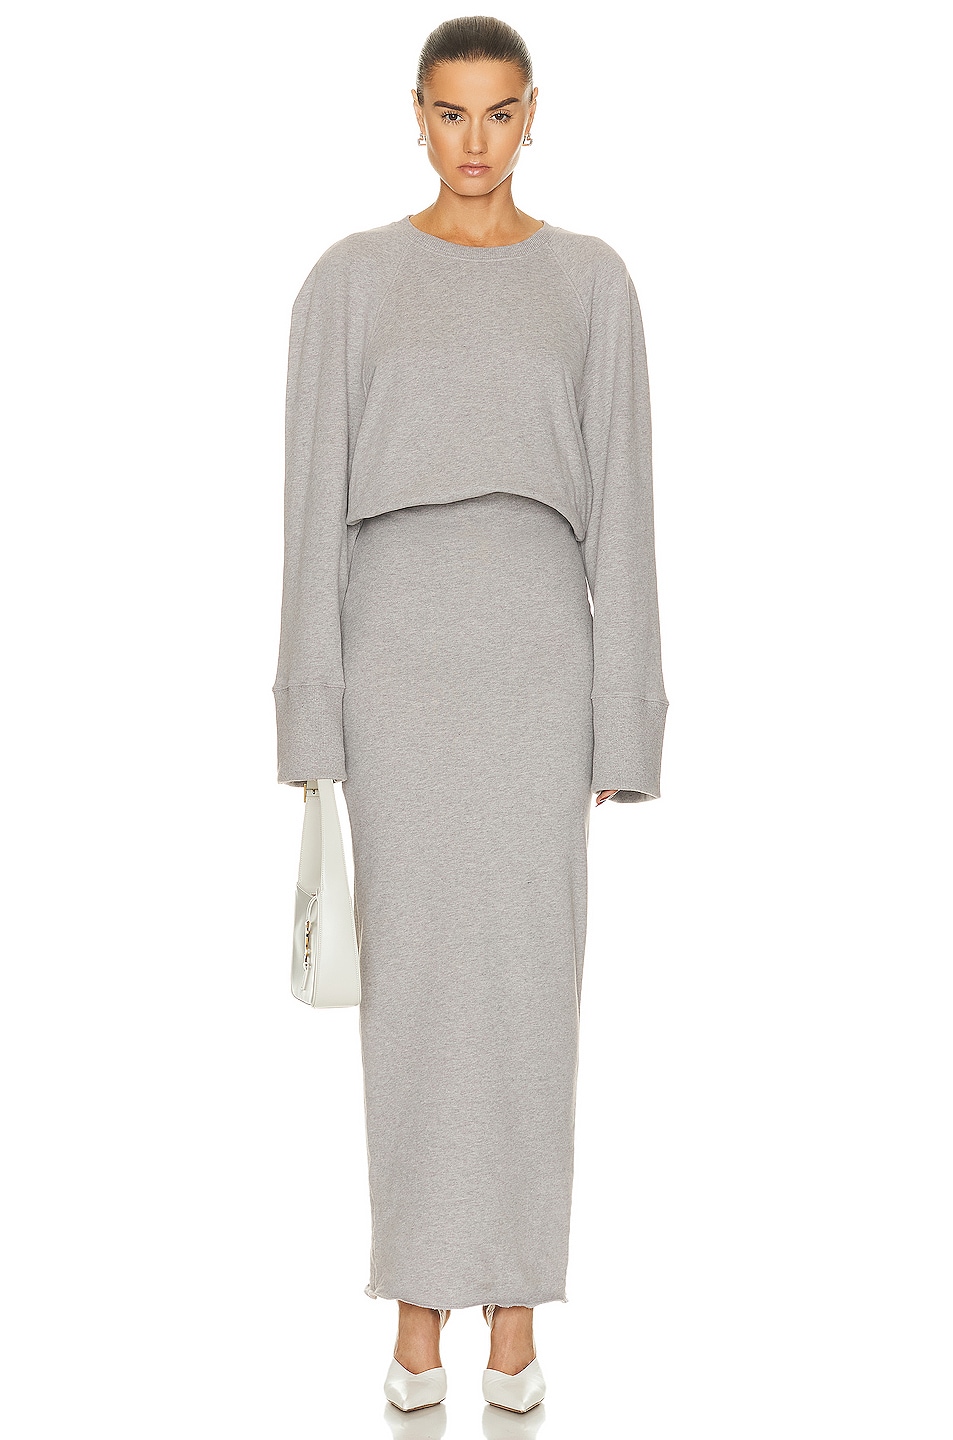 Image 1 of GRLFRND The Femme Sweatshirt Dress in Heather Grey